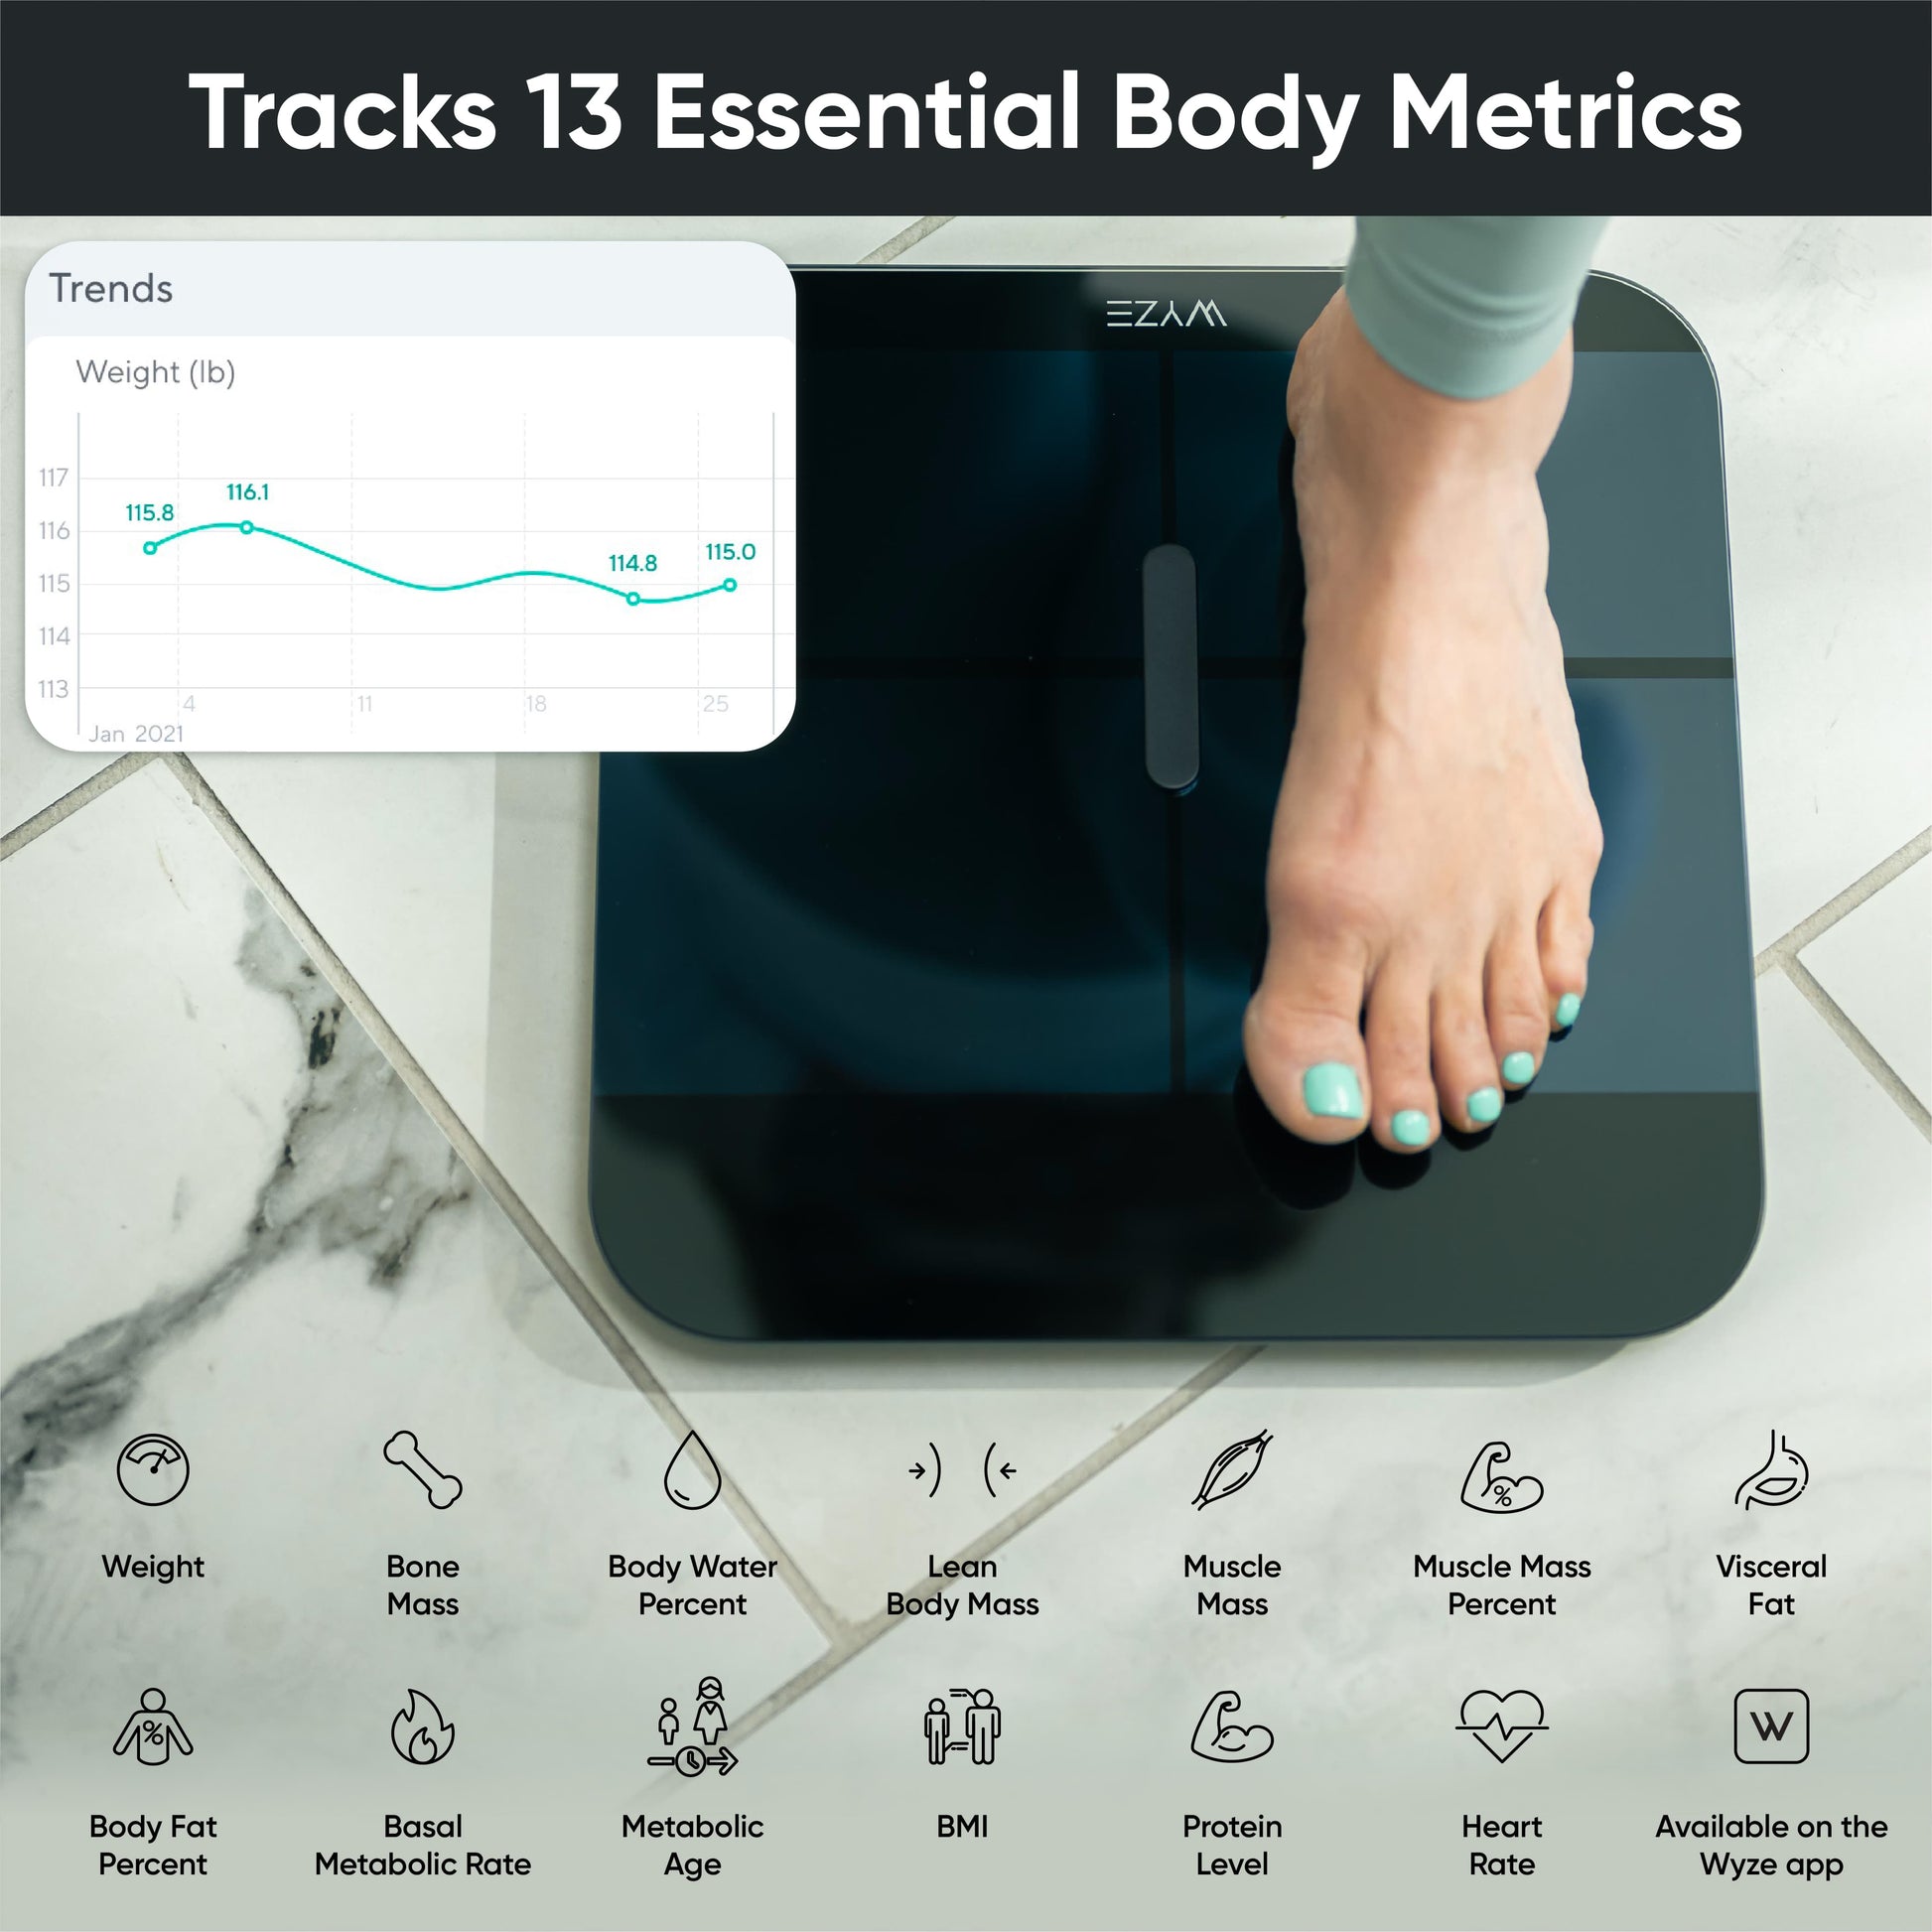 Wyze Smart Scale x for Body Weight, Digital Bathroom Scale for BMI, Body, Black